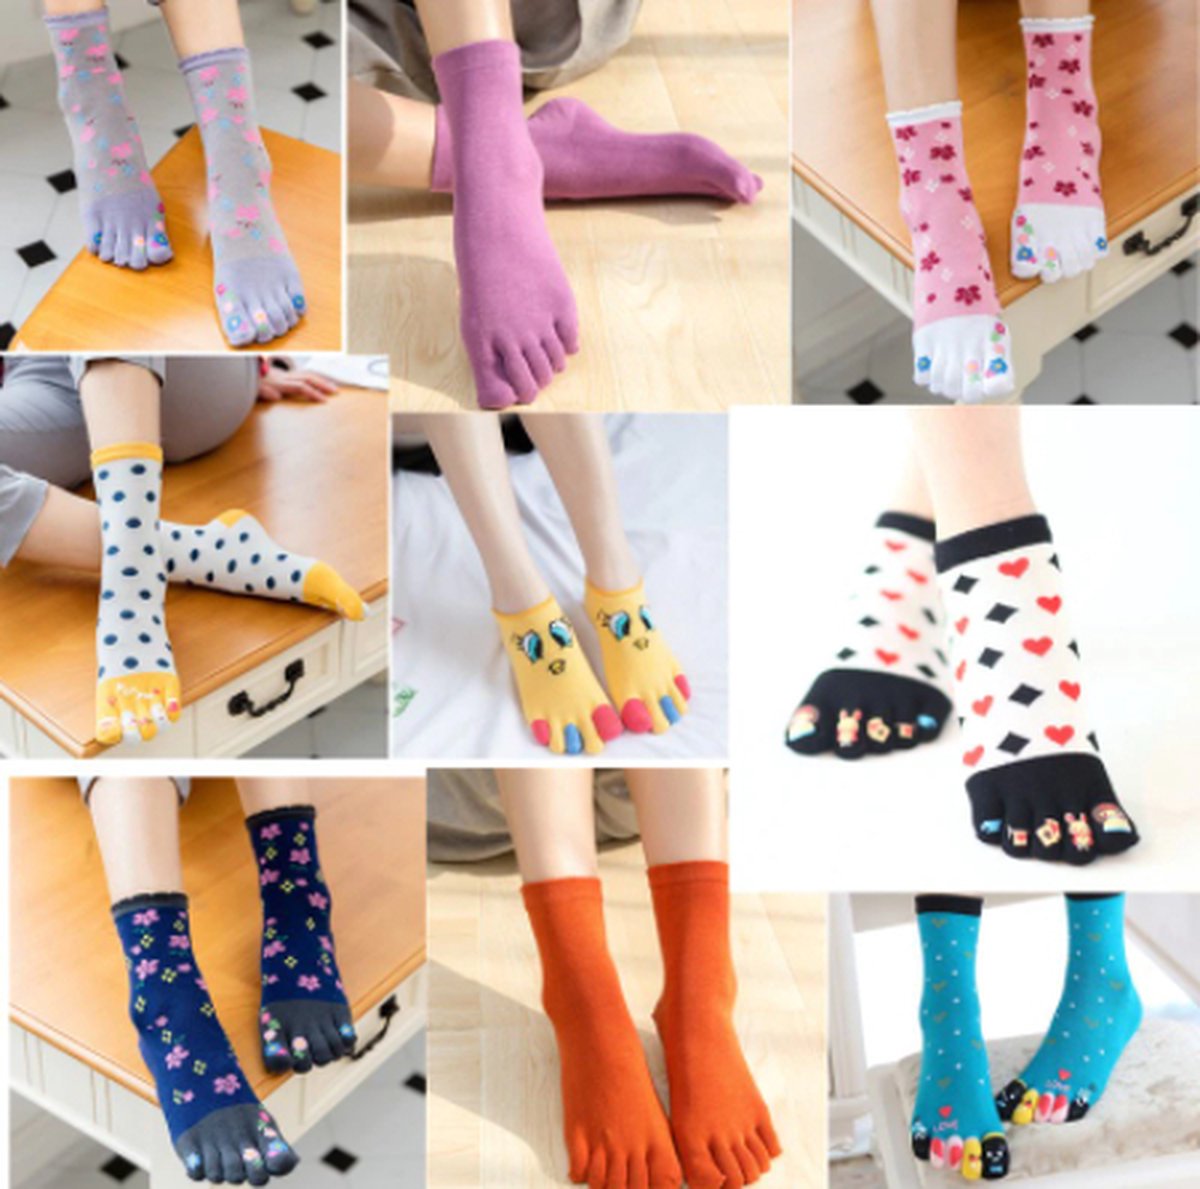 Teensokken - teen sokken - toe socks - toesocks - dames - 3 paar - beige / roze / grijs / blauw - 36-40 - mix / random - GrandSock